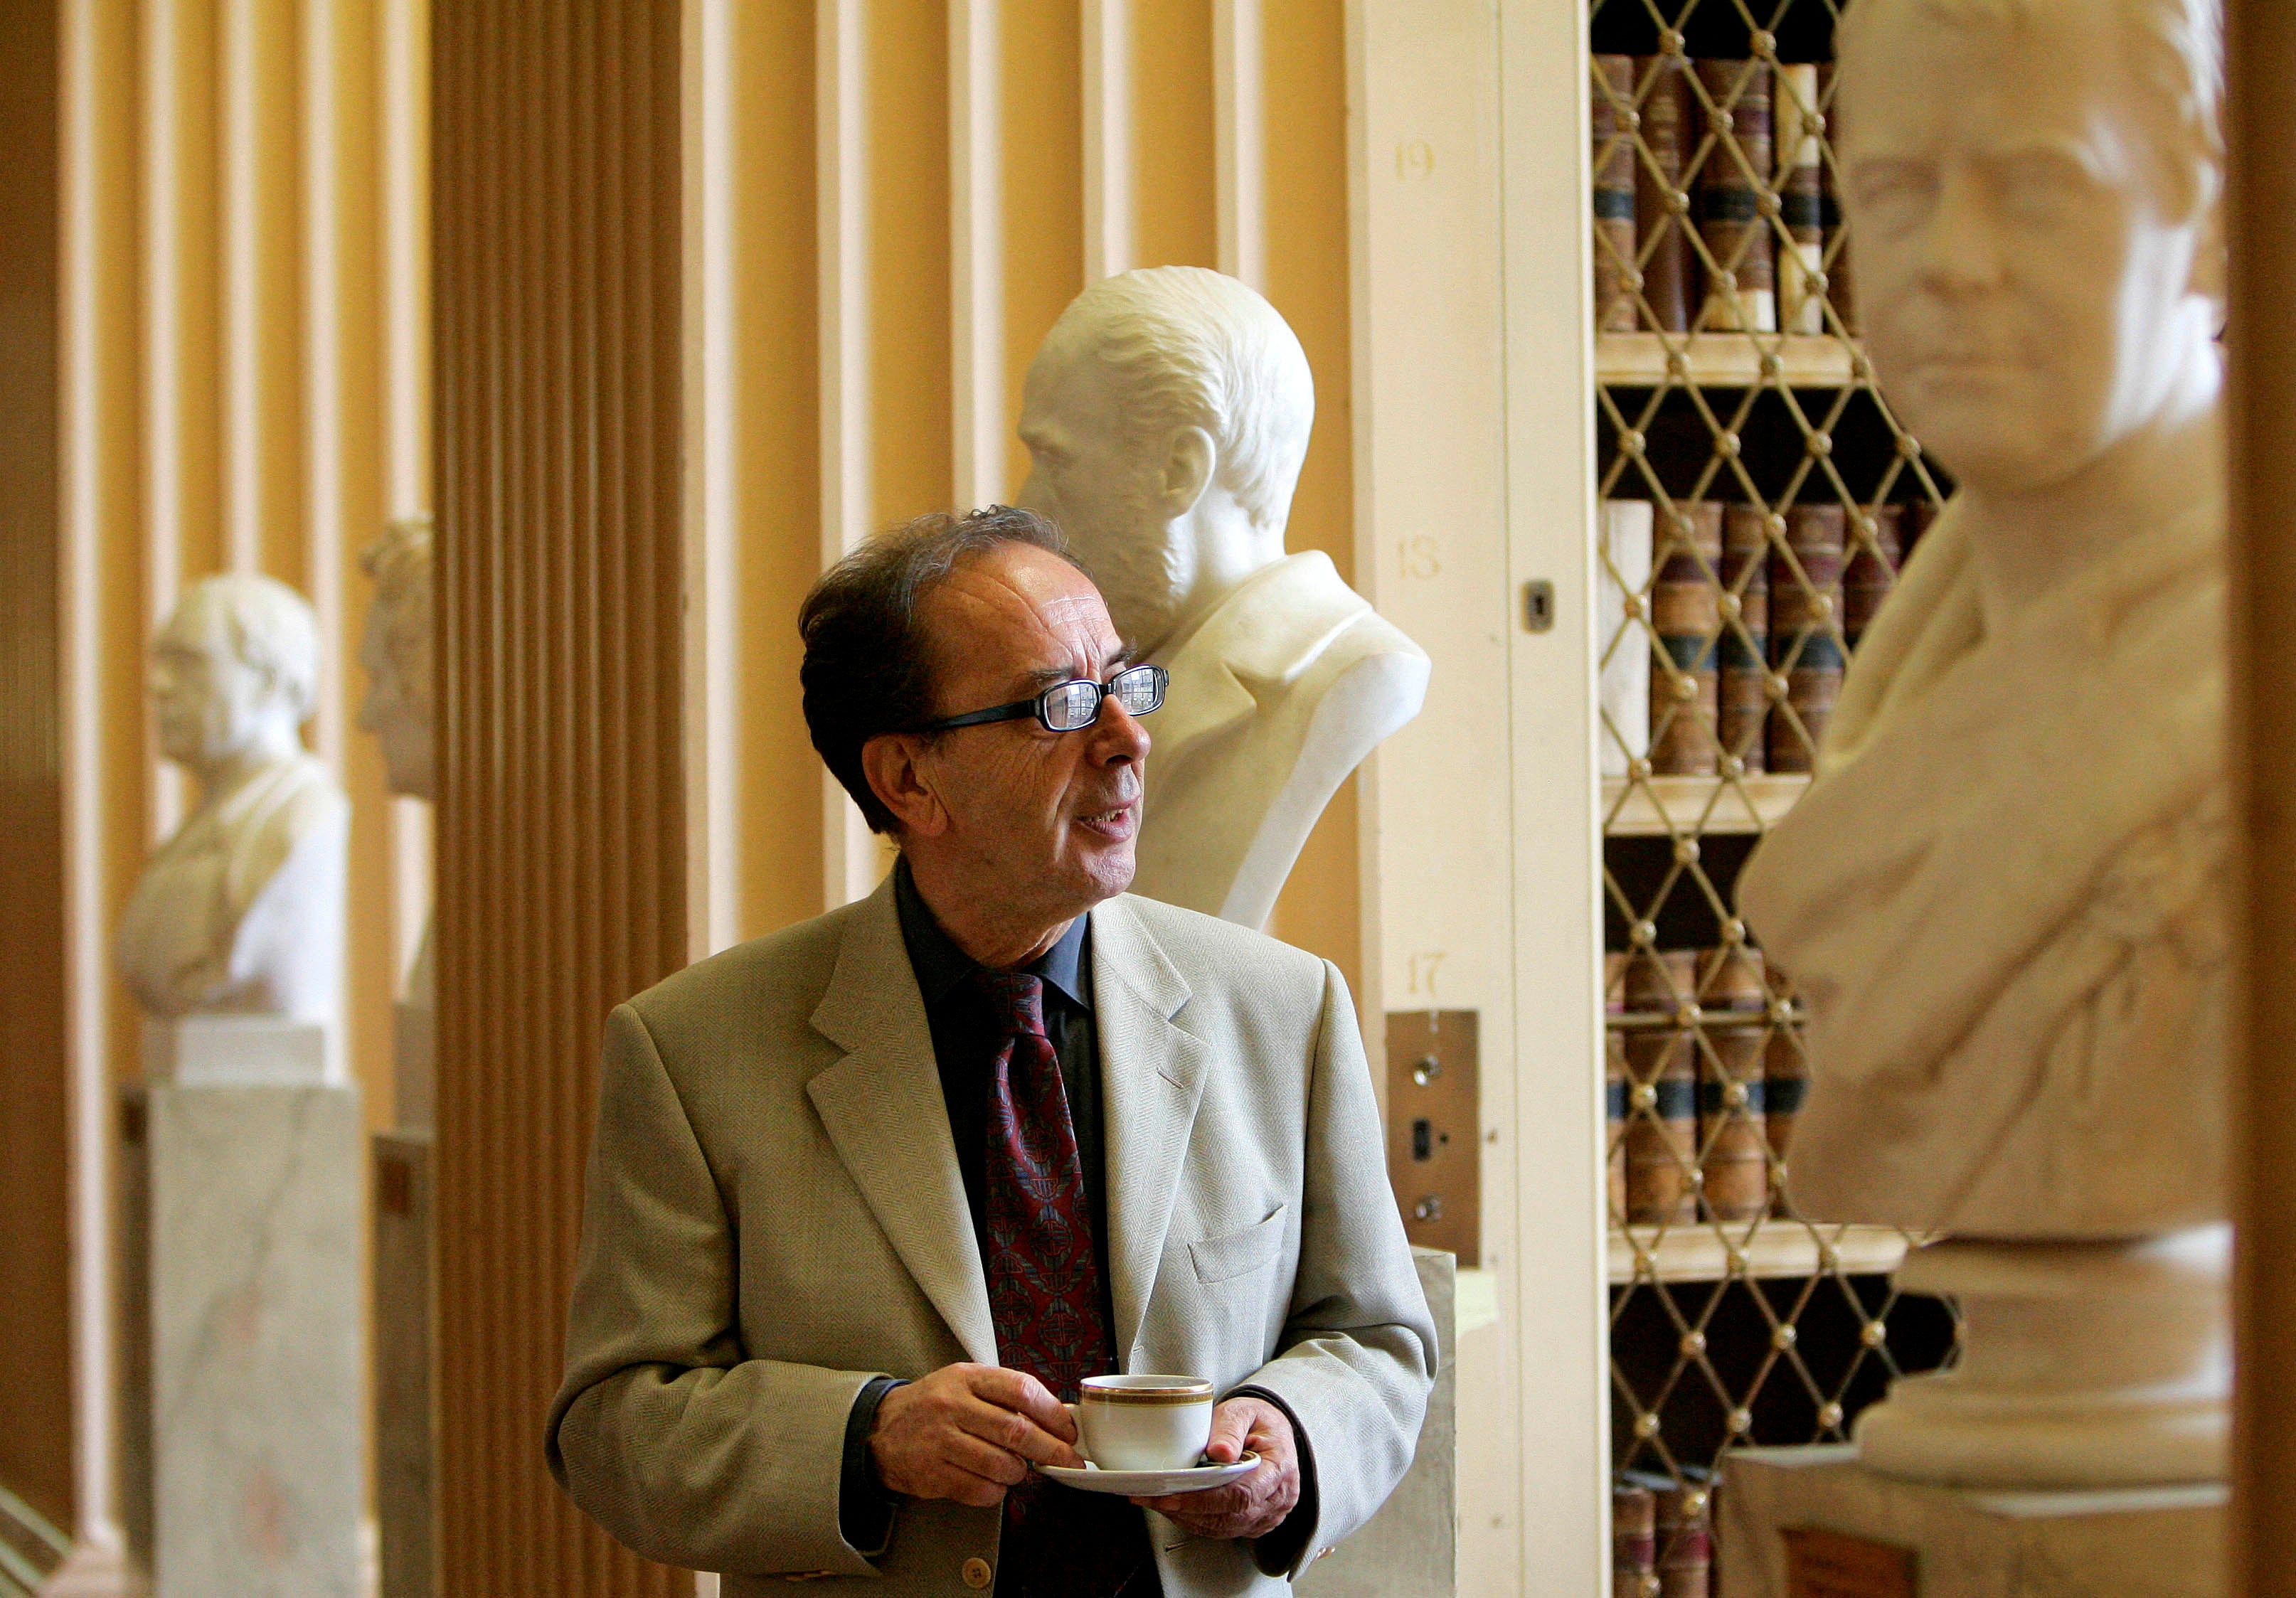 Ismail Kadare in the Playfair Library in Edinburgh in 2005